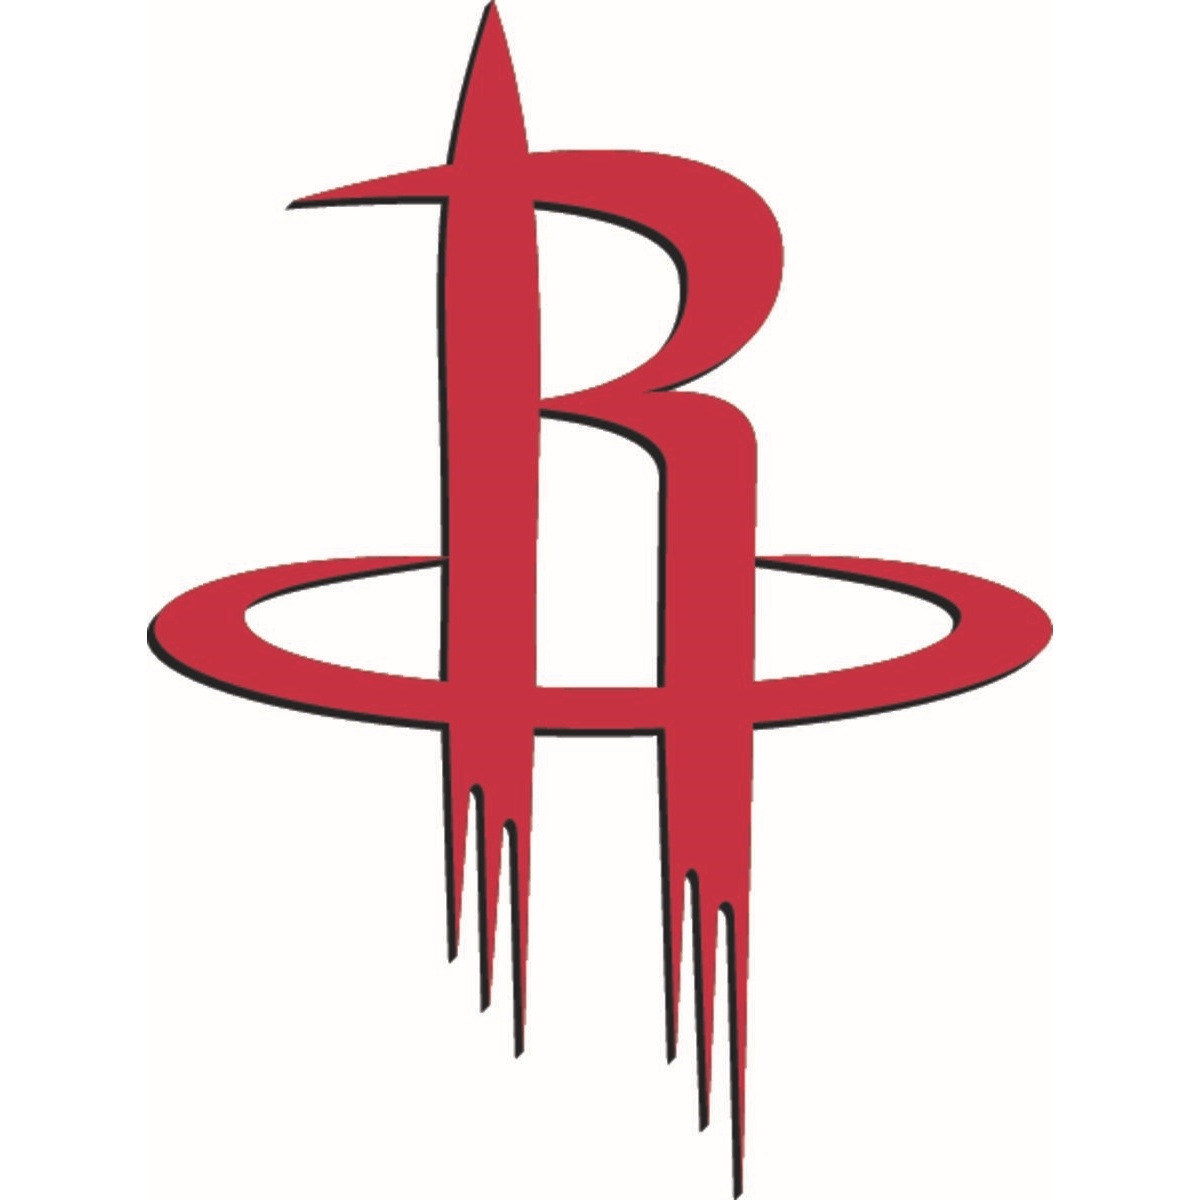 Ballons de basket NBA Team Alliance Houston Rockets